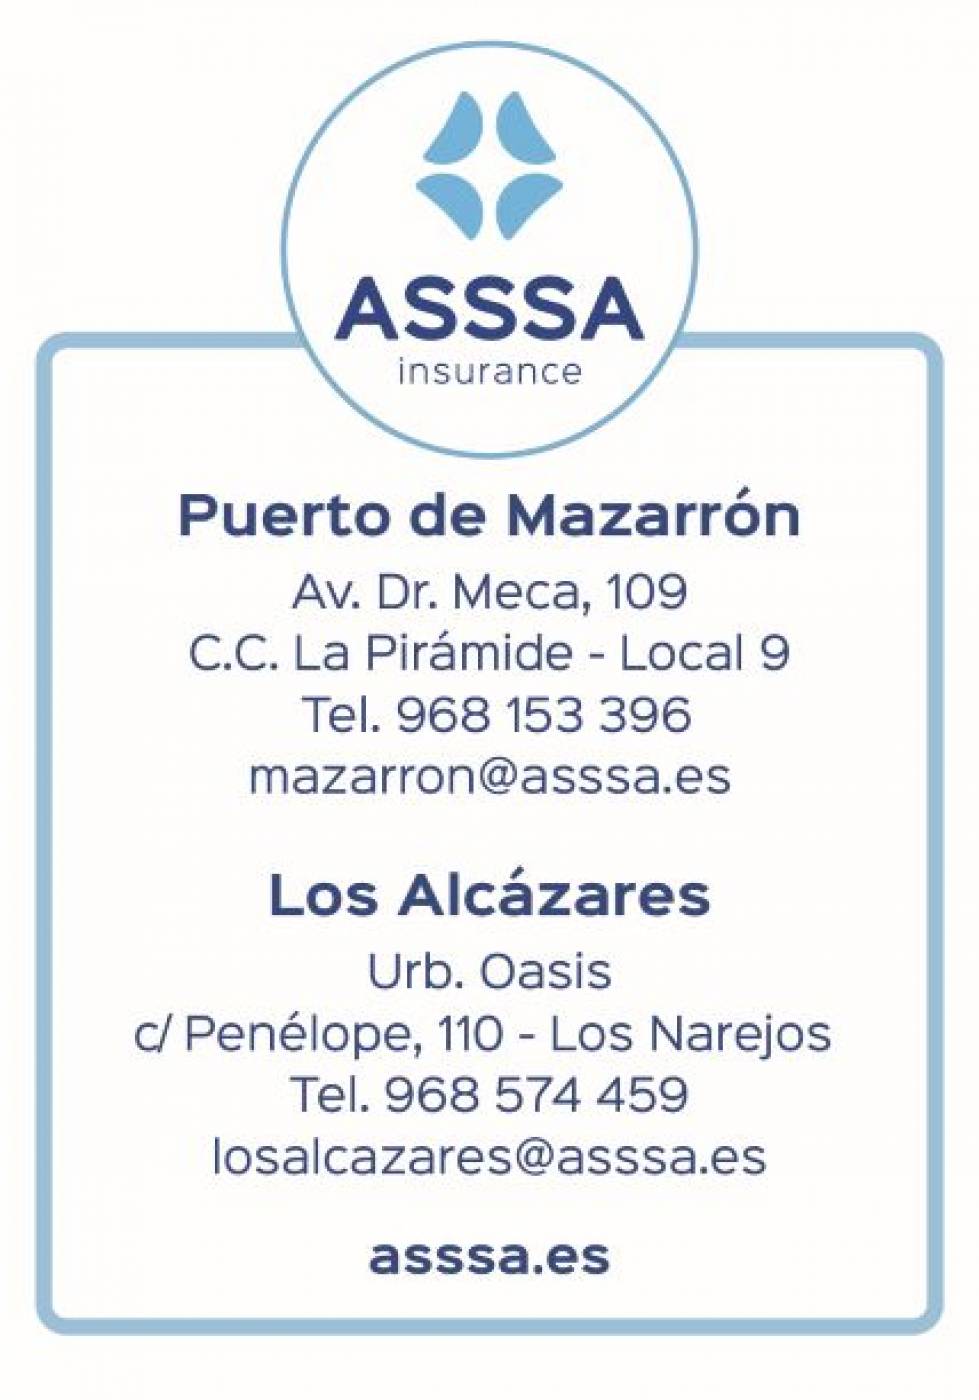 ASSSA Health Insurance Camposol